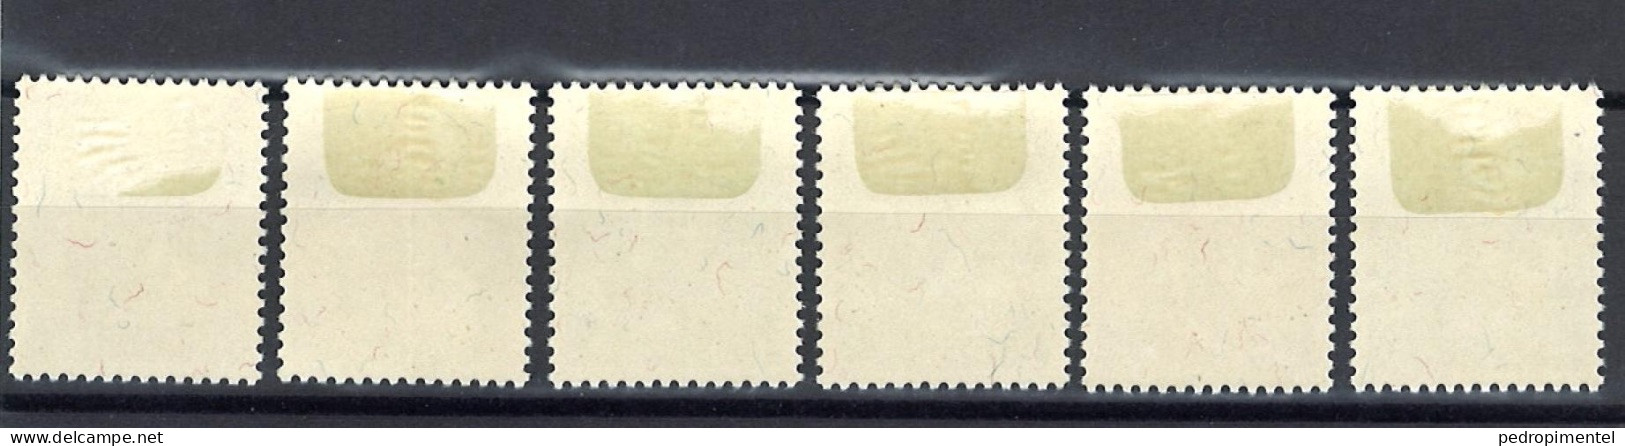 Portugal Stamps 1945 "President Carmona" Condition MH #652-657 - Nuovi